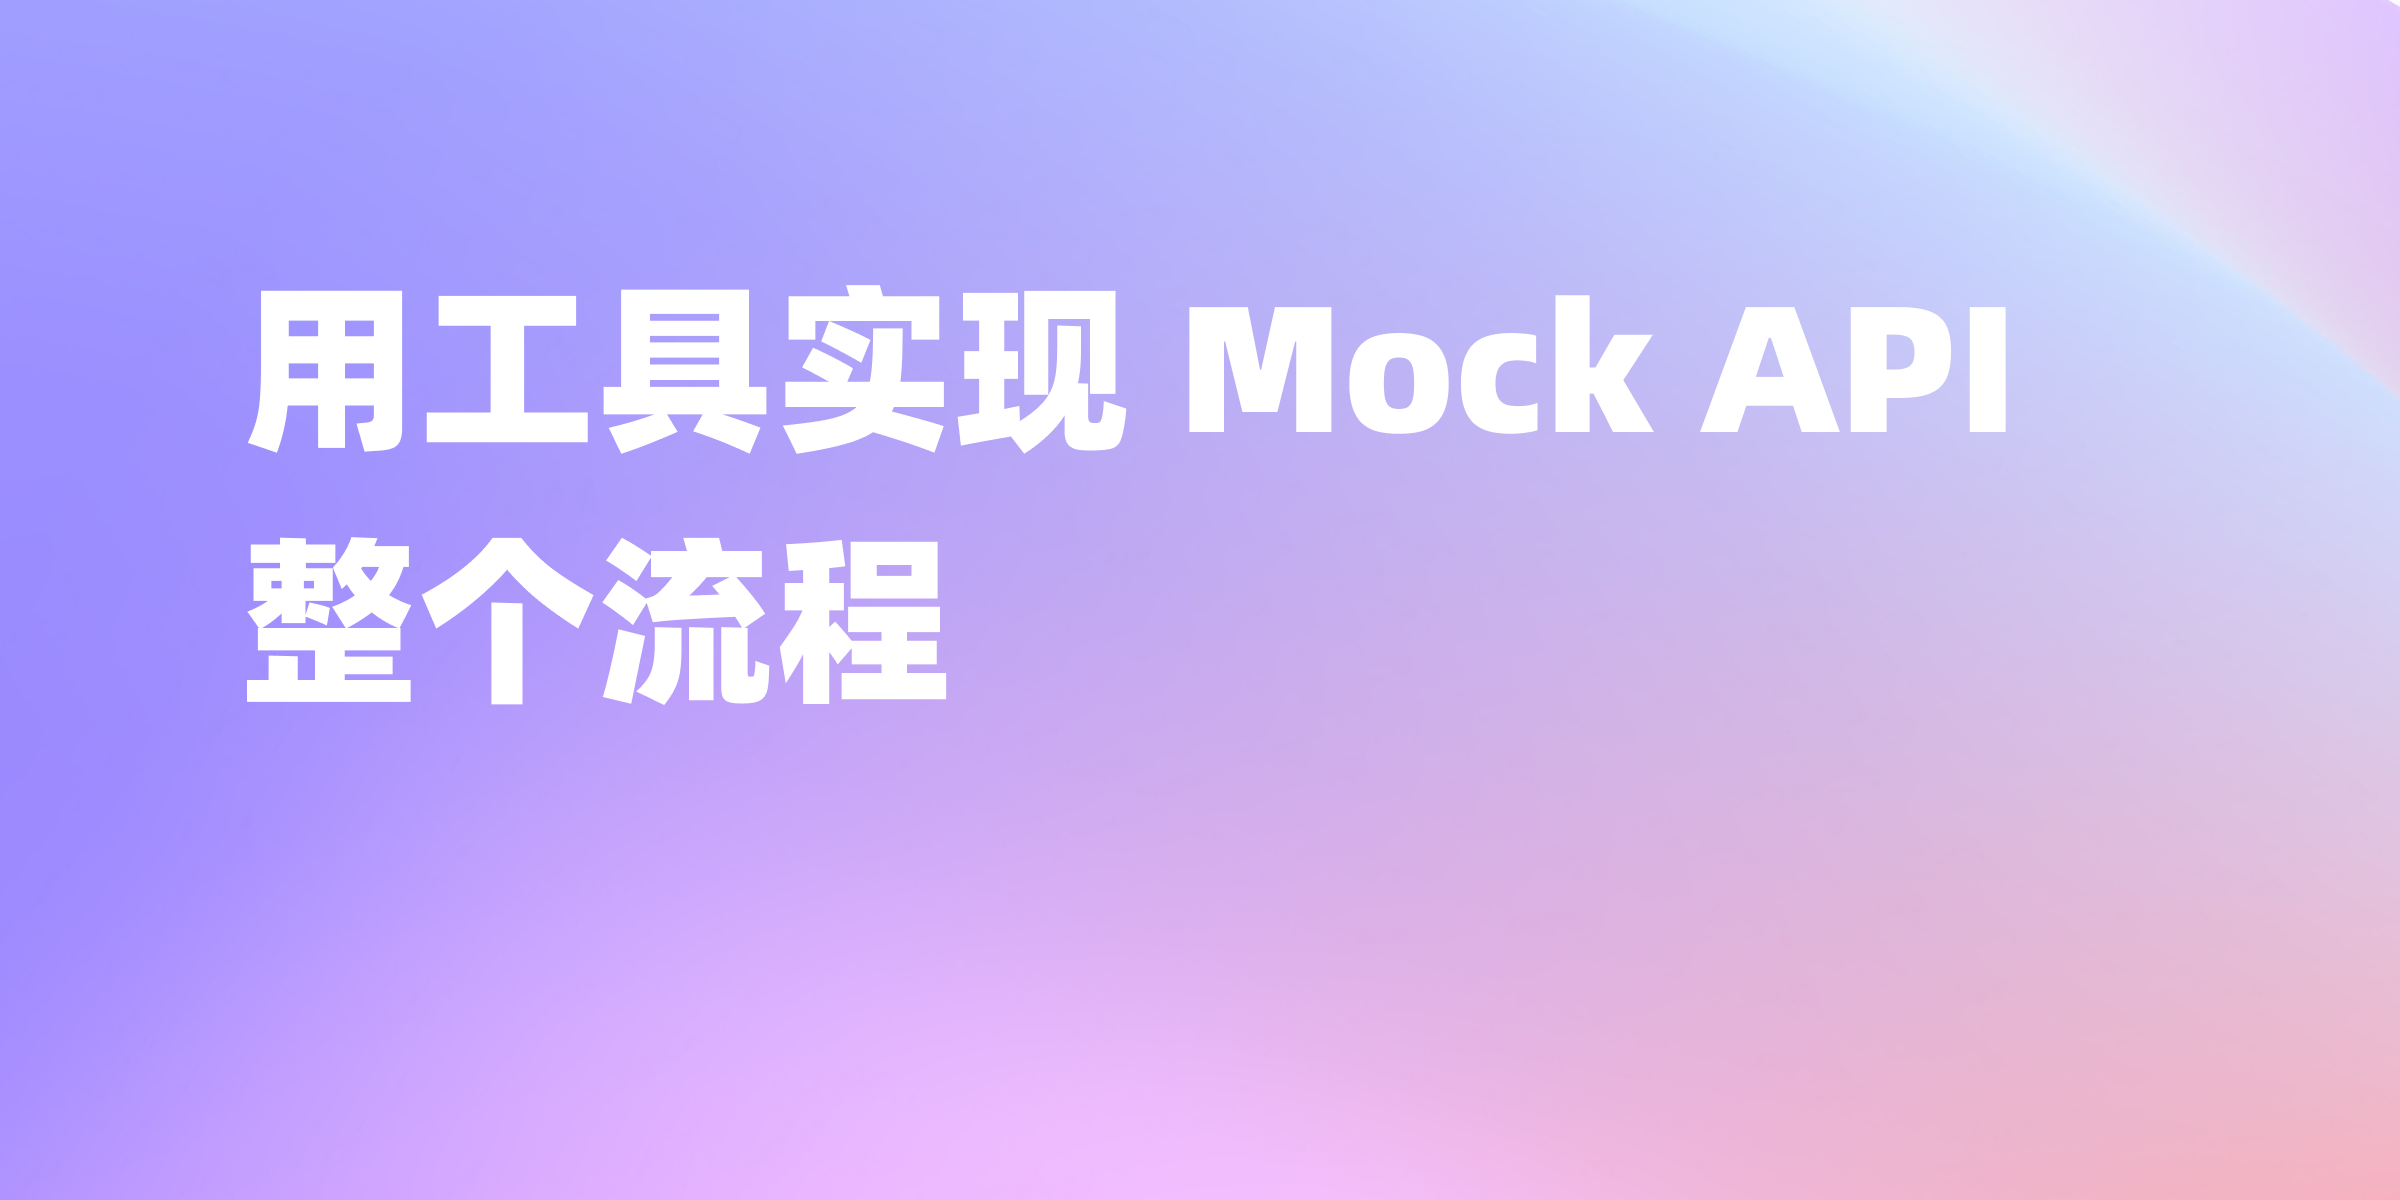 API Mock 教程， 简单易懂。